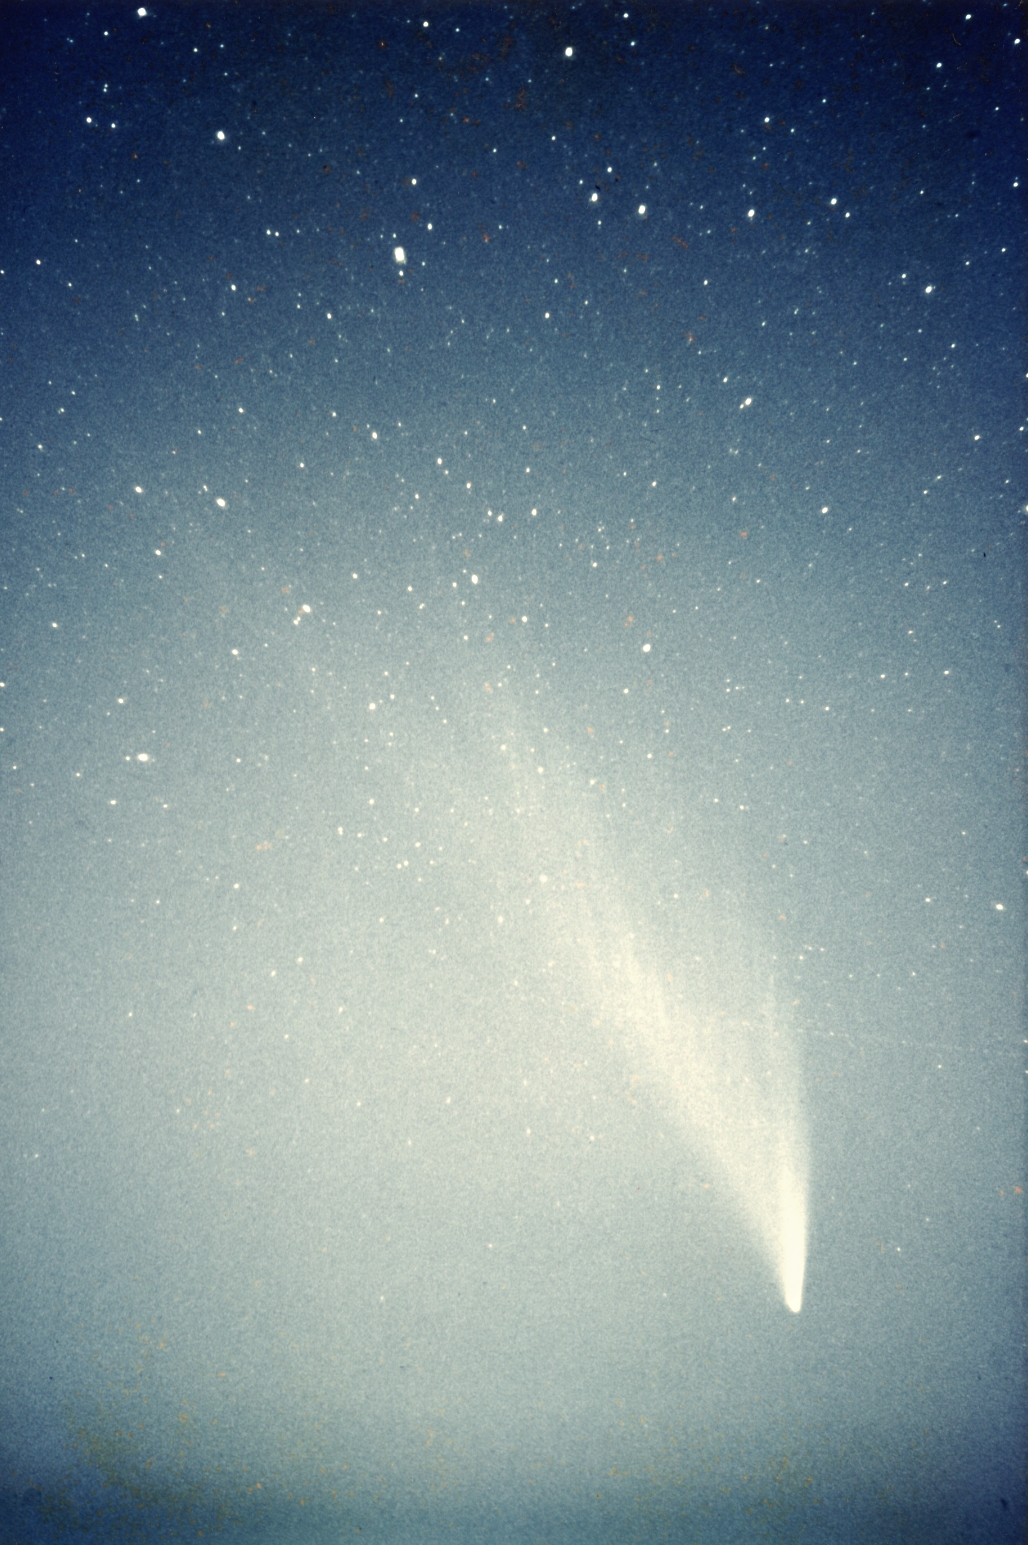 Komet West, genaue Aufnahmedaten unbekannt, Kodak Highspeed Ektachrome